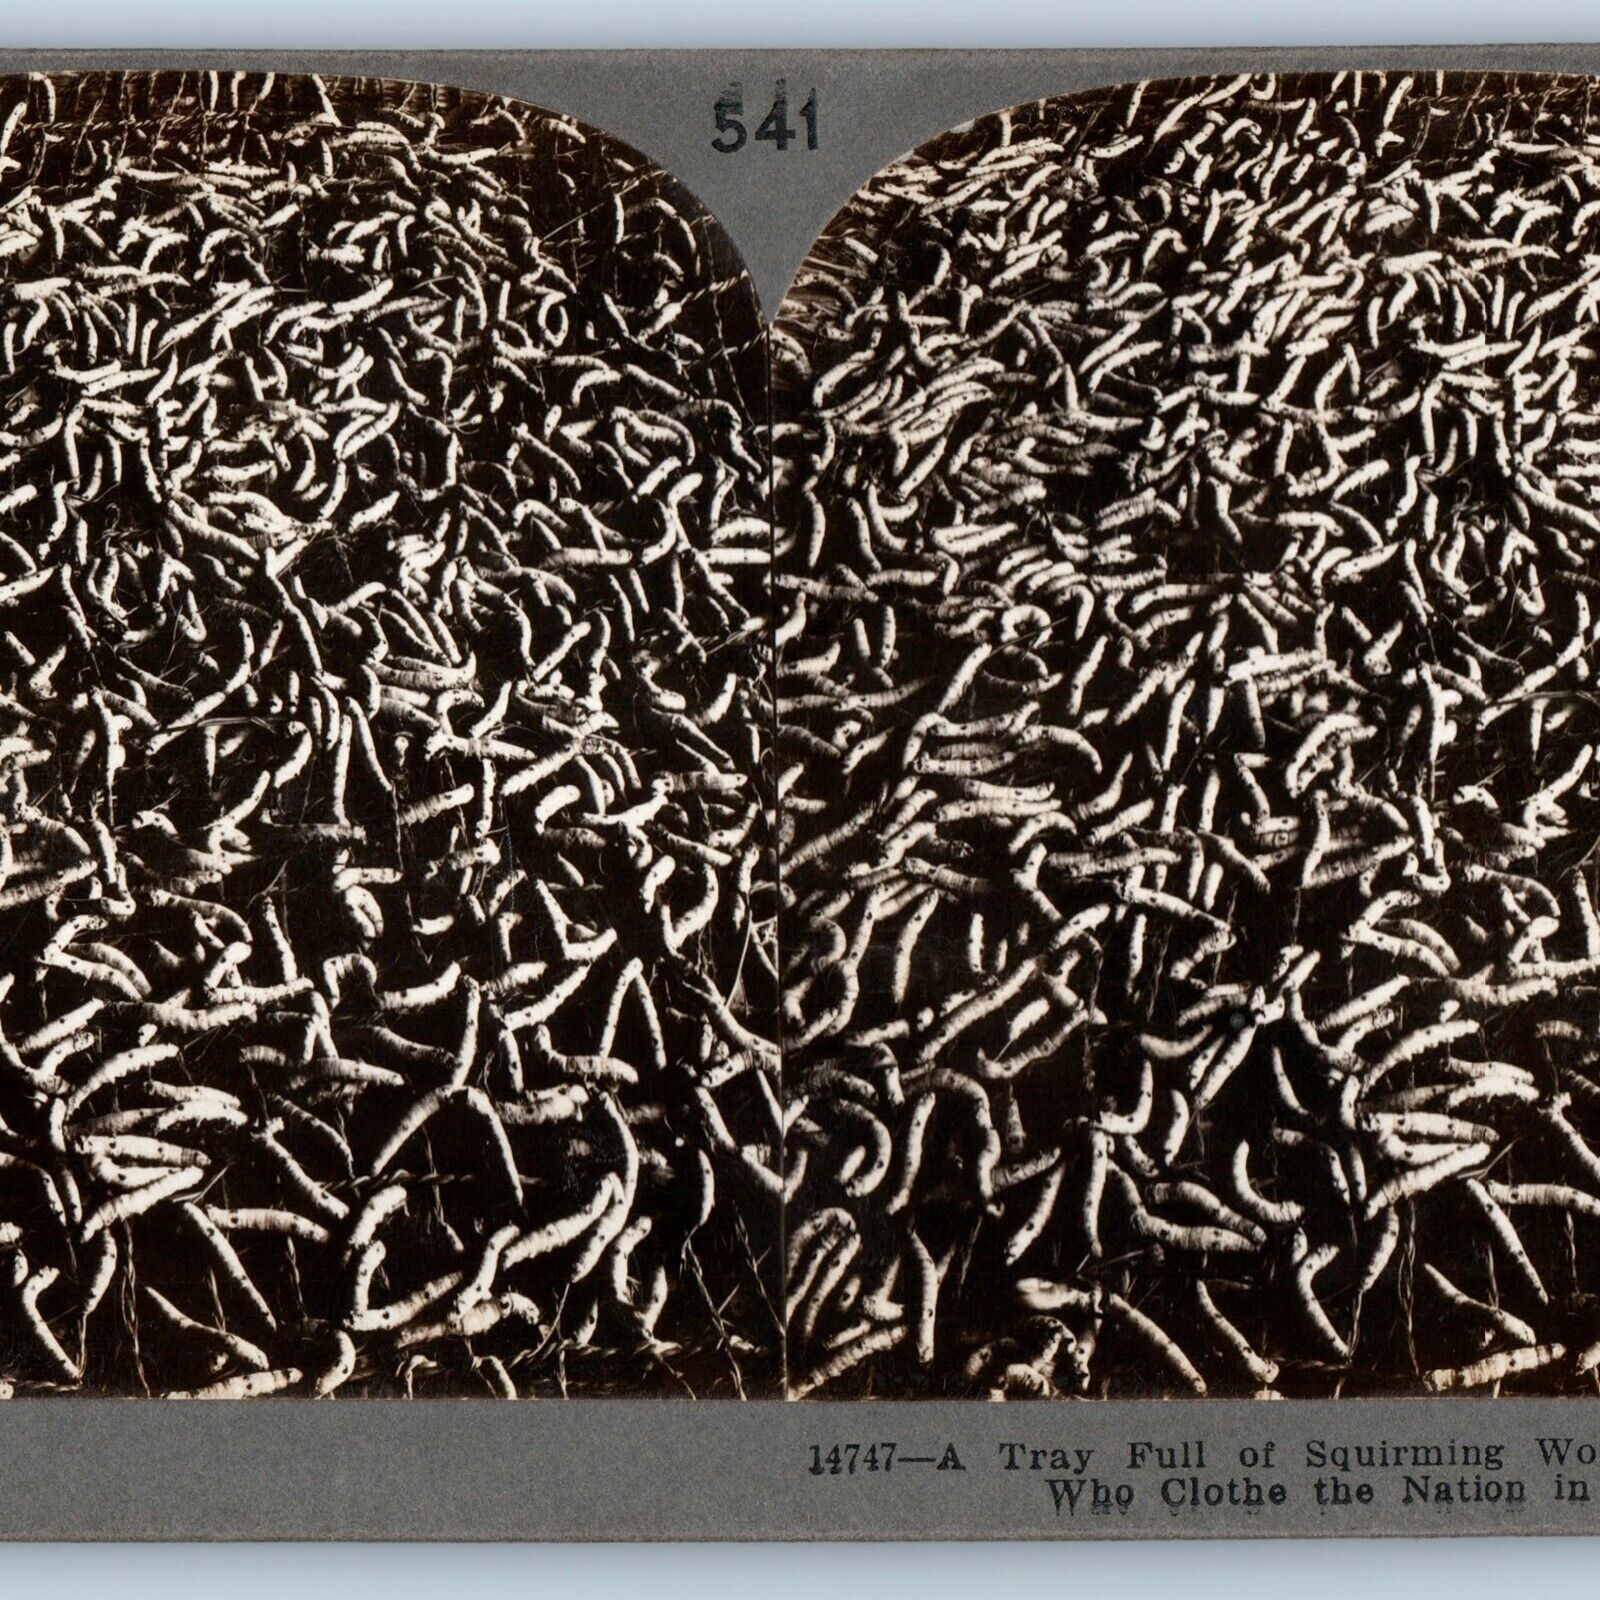 1904 Japan Silk Worms Tray Silk Factory Stereoview Real Photo Farm Silkworm V31